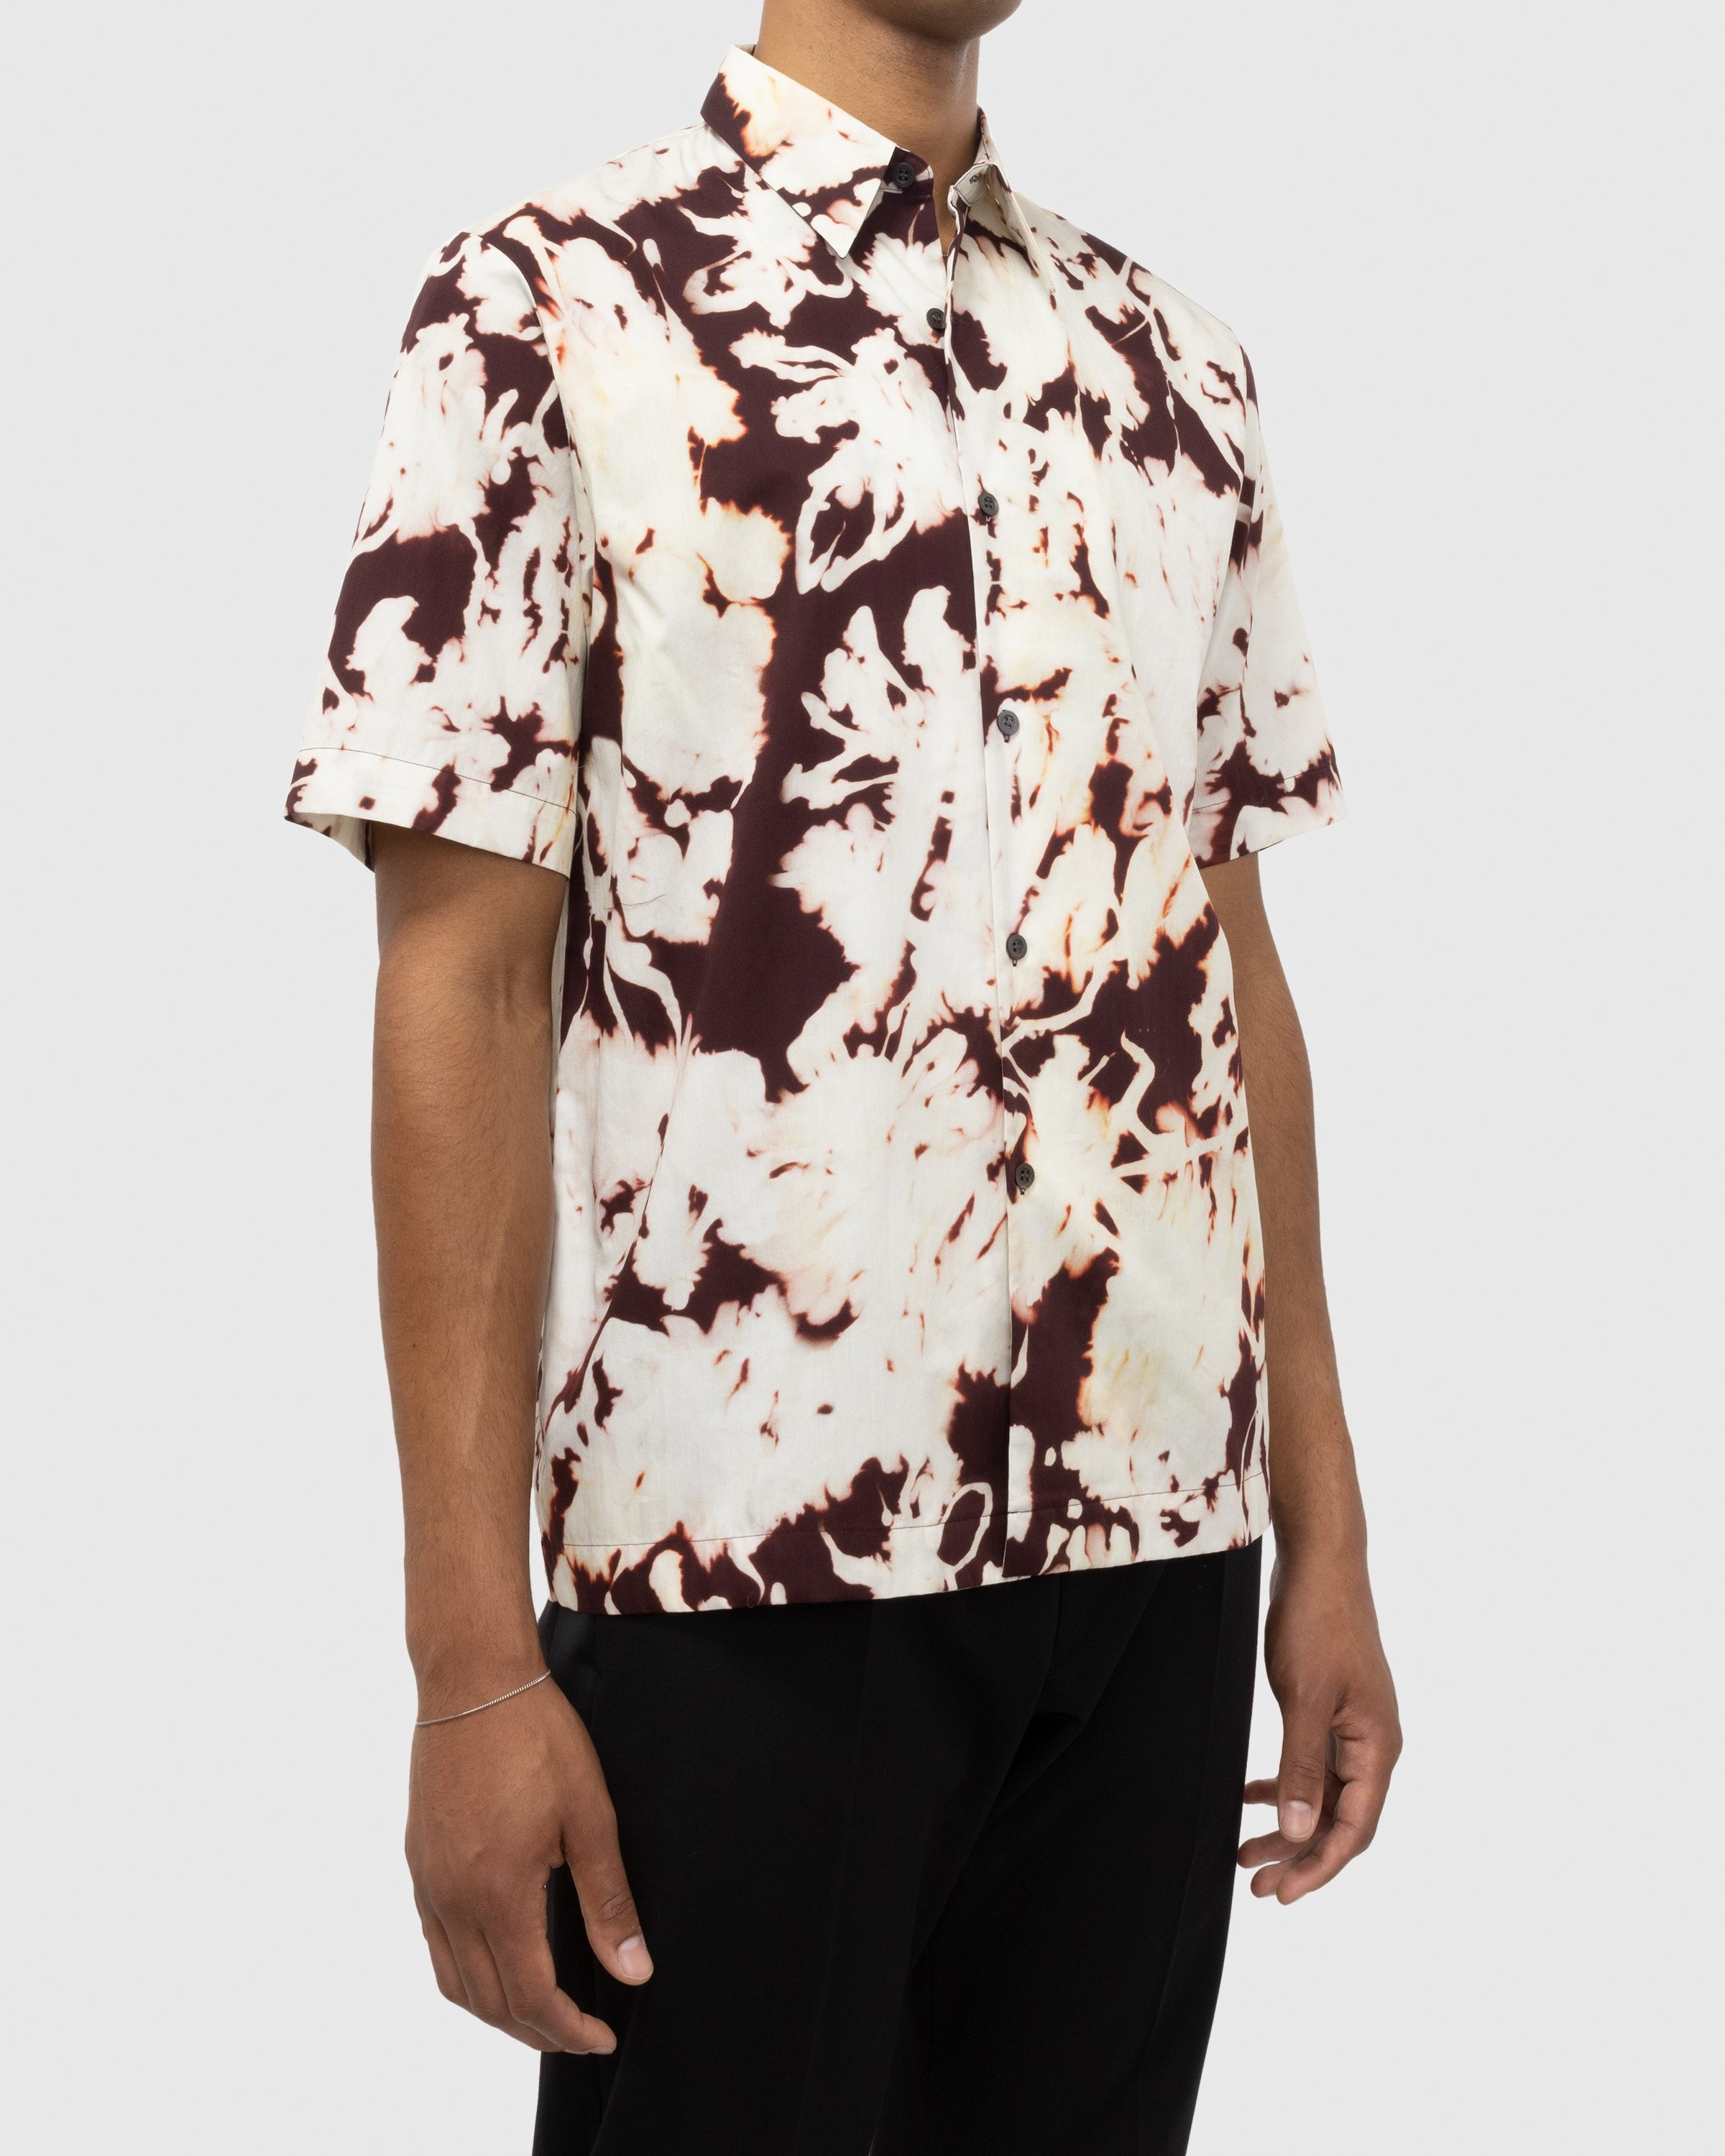 Dries van Noten – Clasen Shirt Multi - Shirts - Multi - Image 2